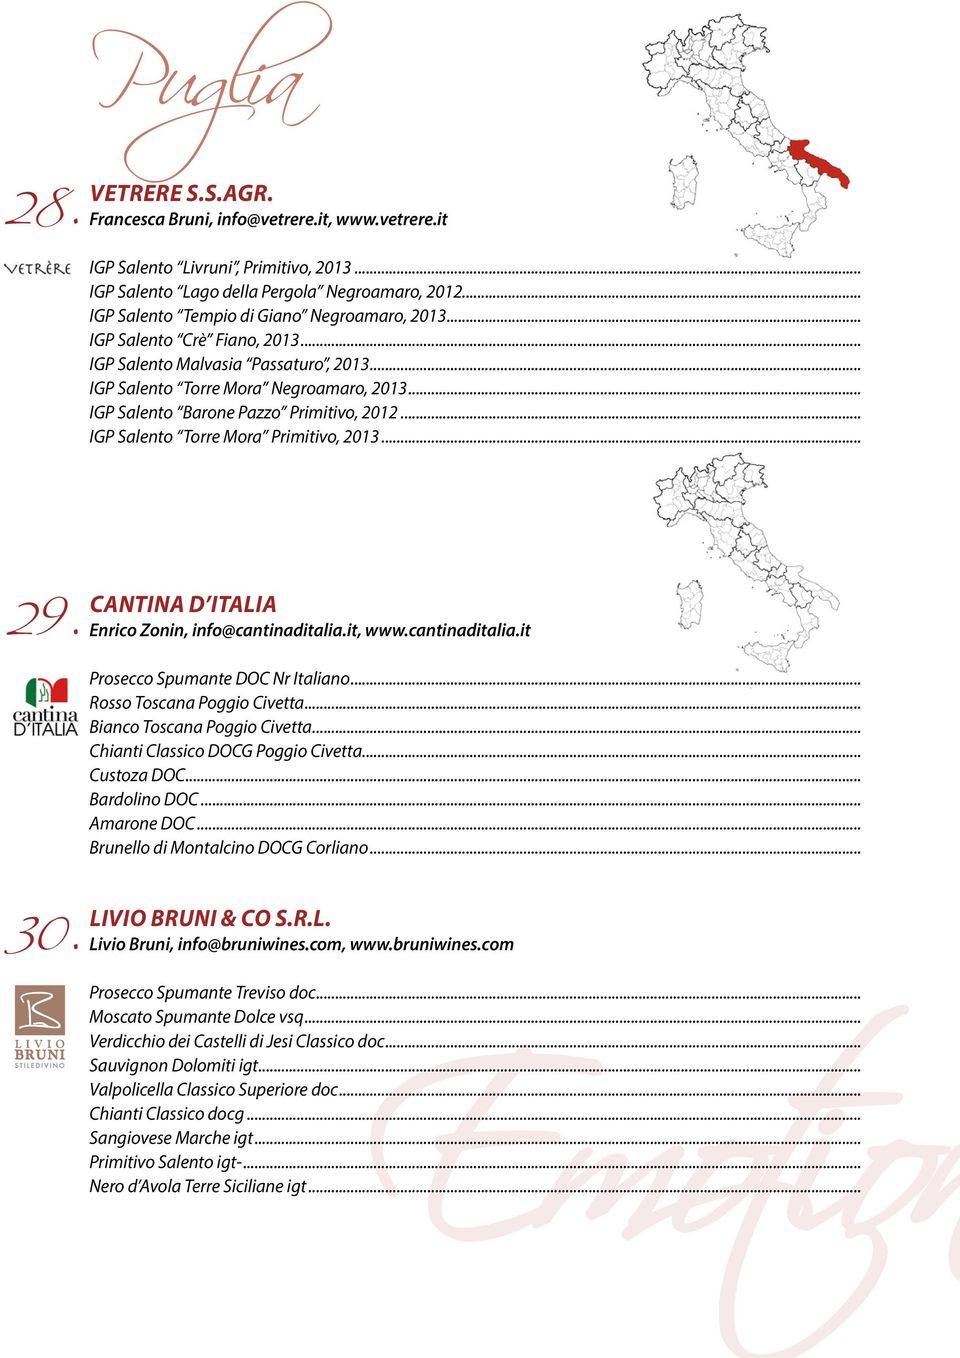 .. IGP Salento Barone Pazzo Primitivo, 2012... IGP Salento Torre Mora Primitivo, 2013... 29. CANTINA D ITALIA Enrico Zonin, info@cantinaditalia.it, www.cantinaditalia.it Prosecco Spumante DOC Nr Italiano.